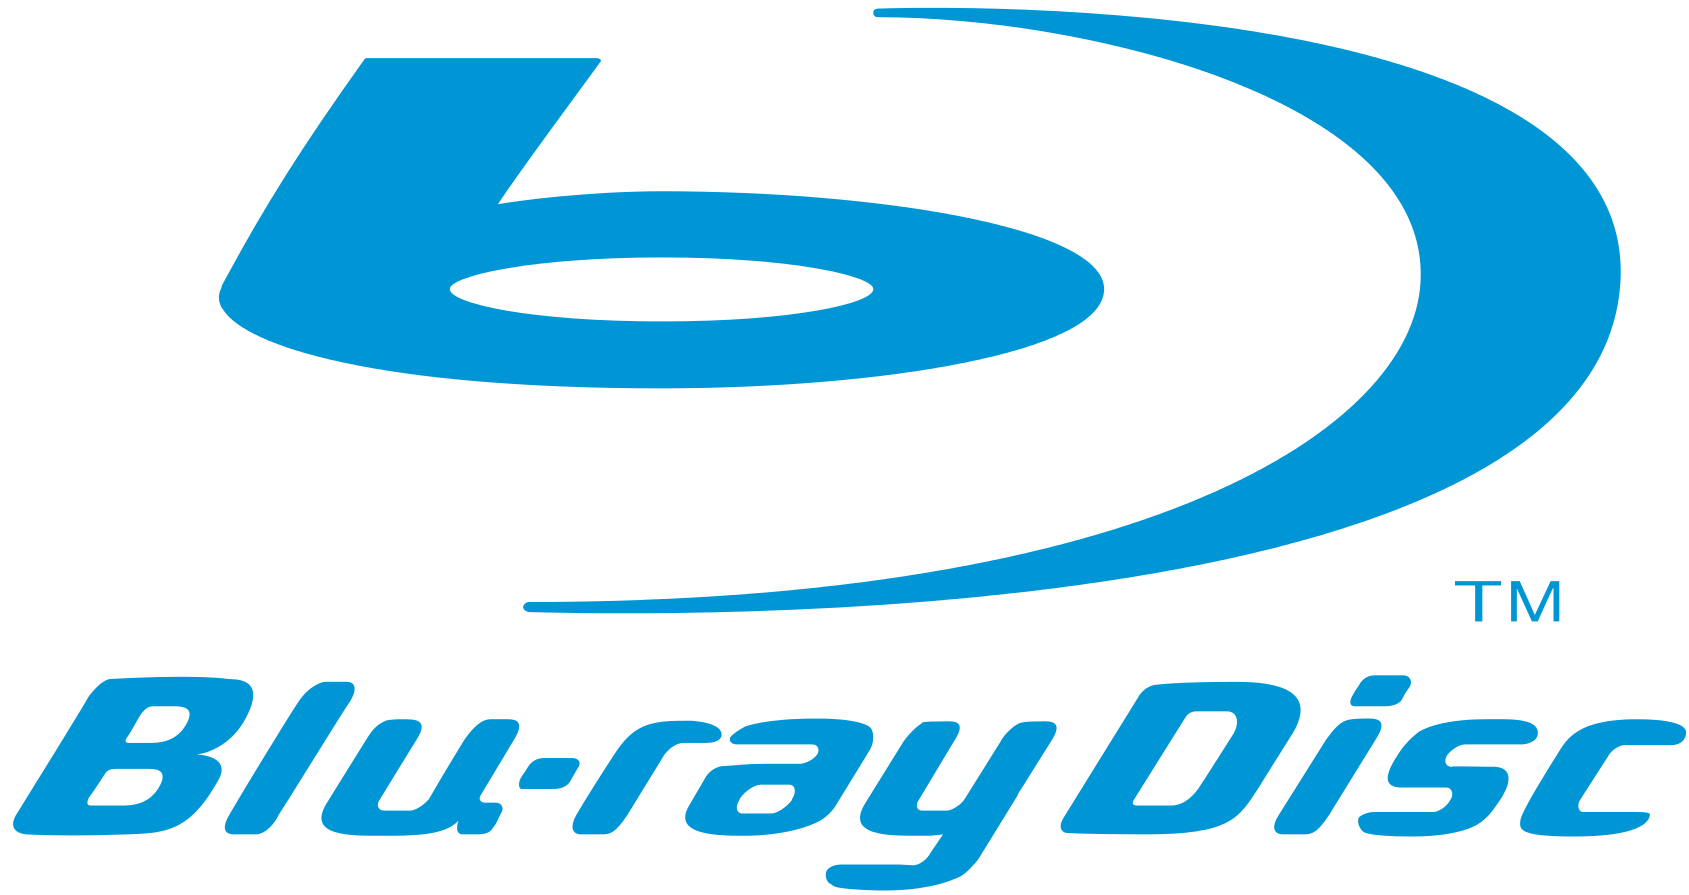 blu-ray-logo.png